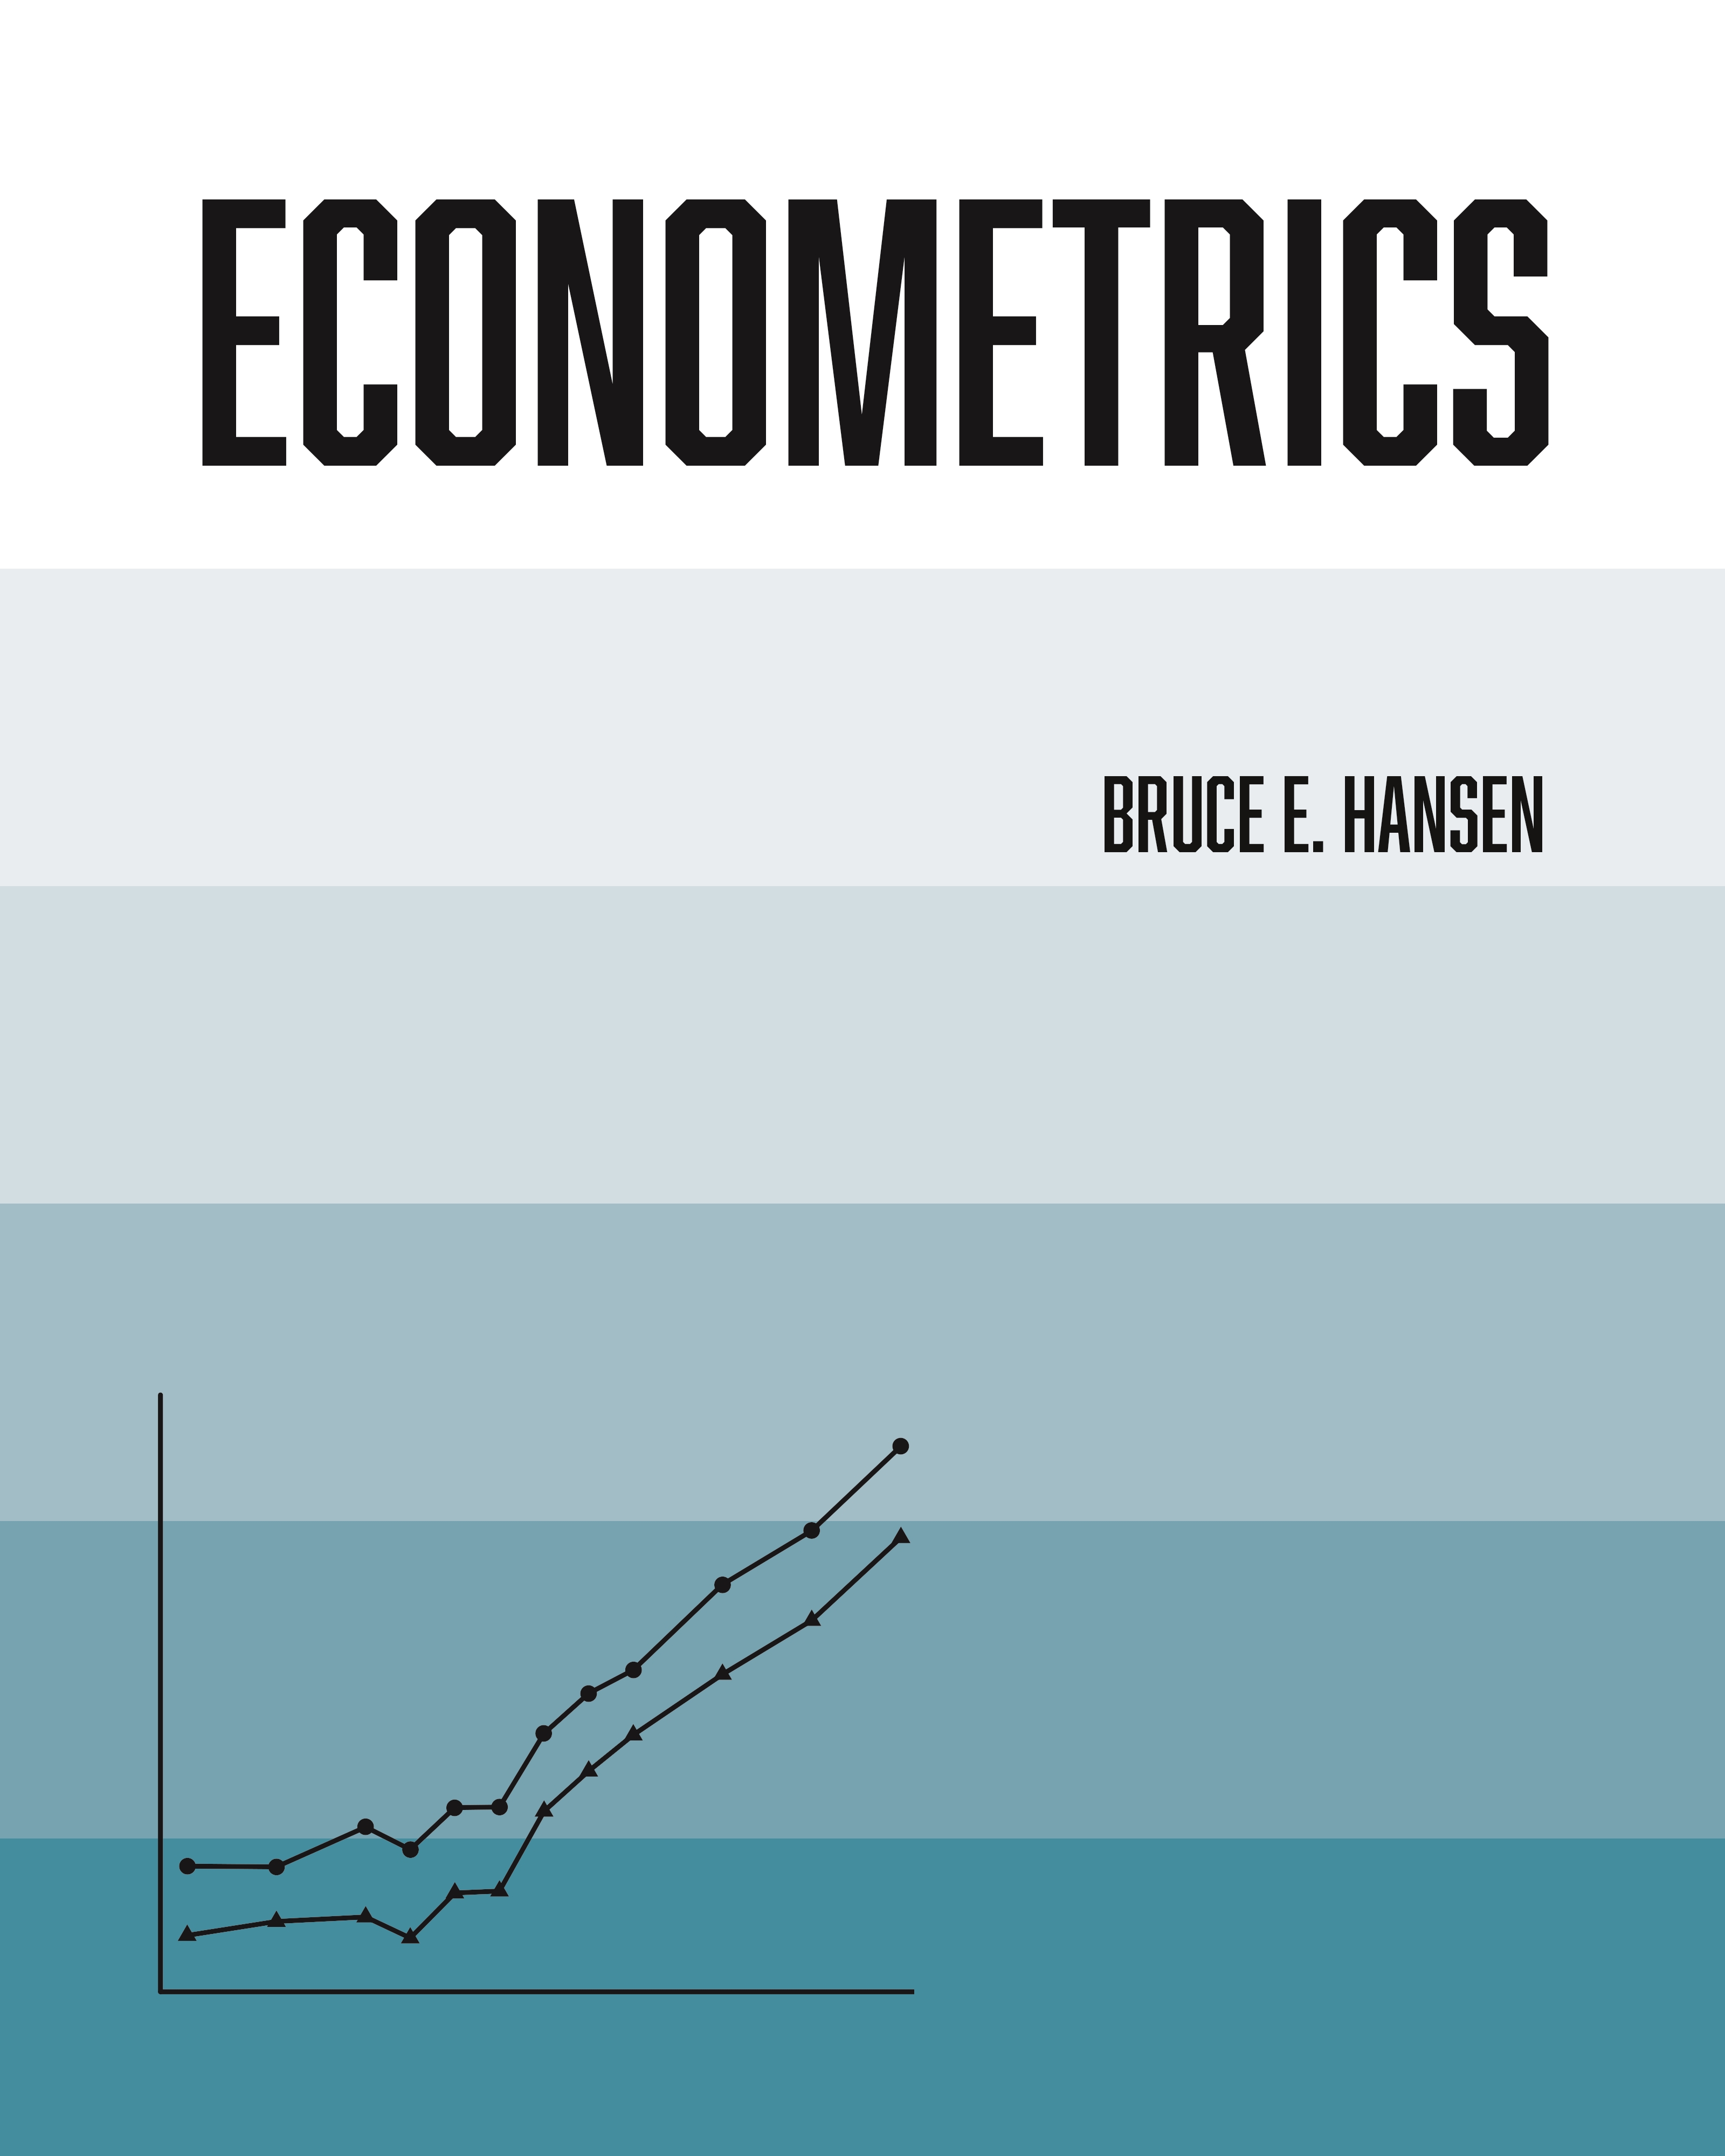 phd economics books